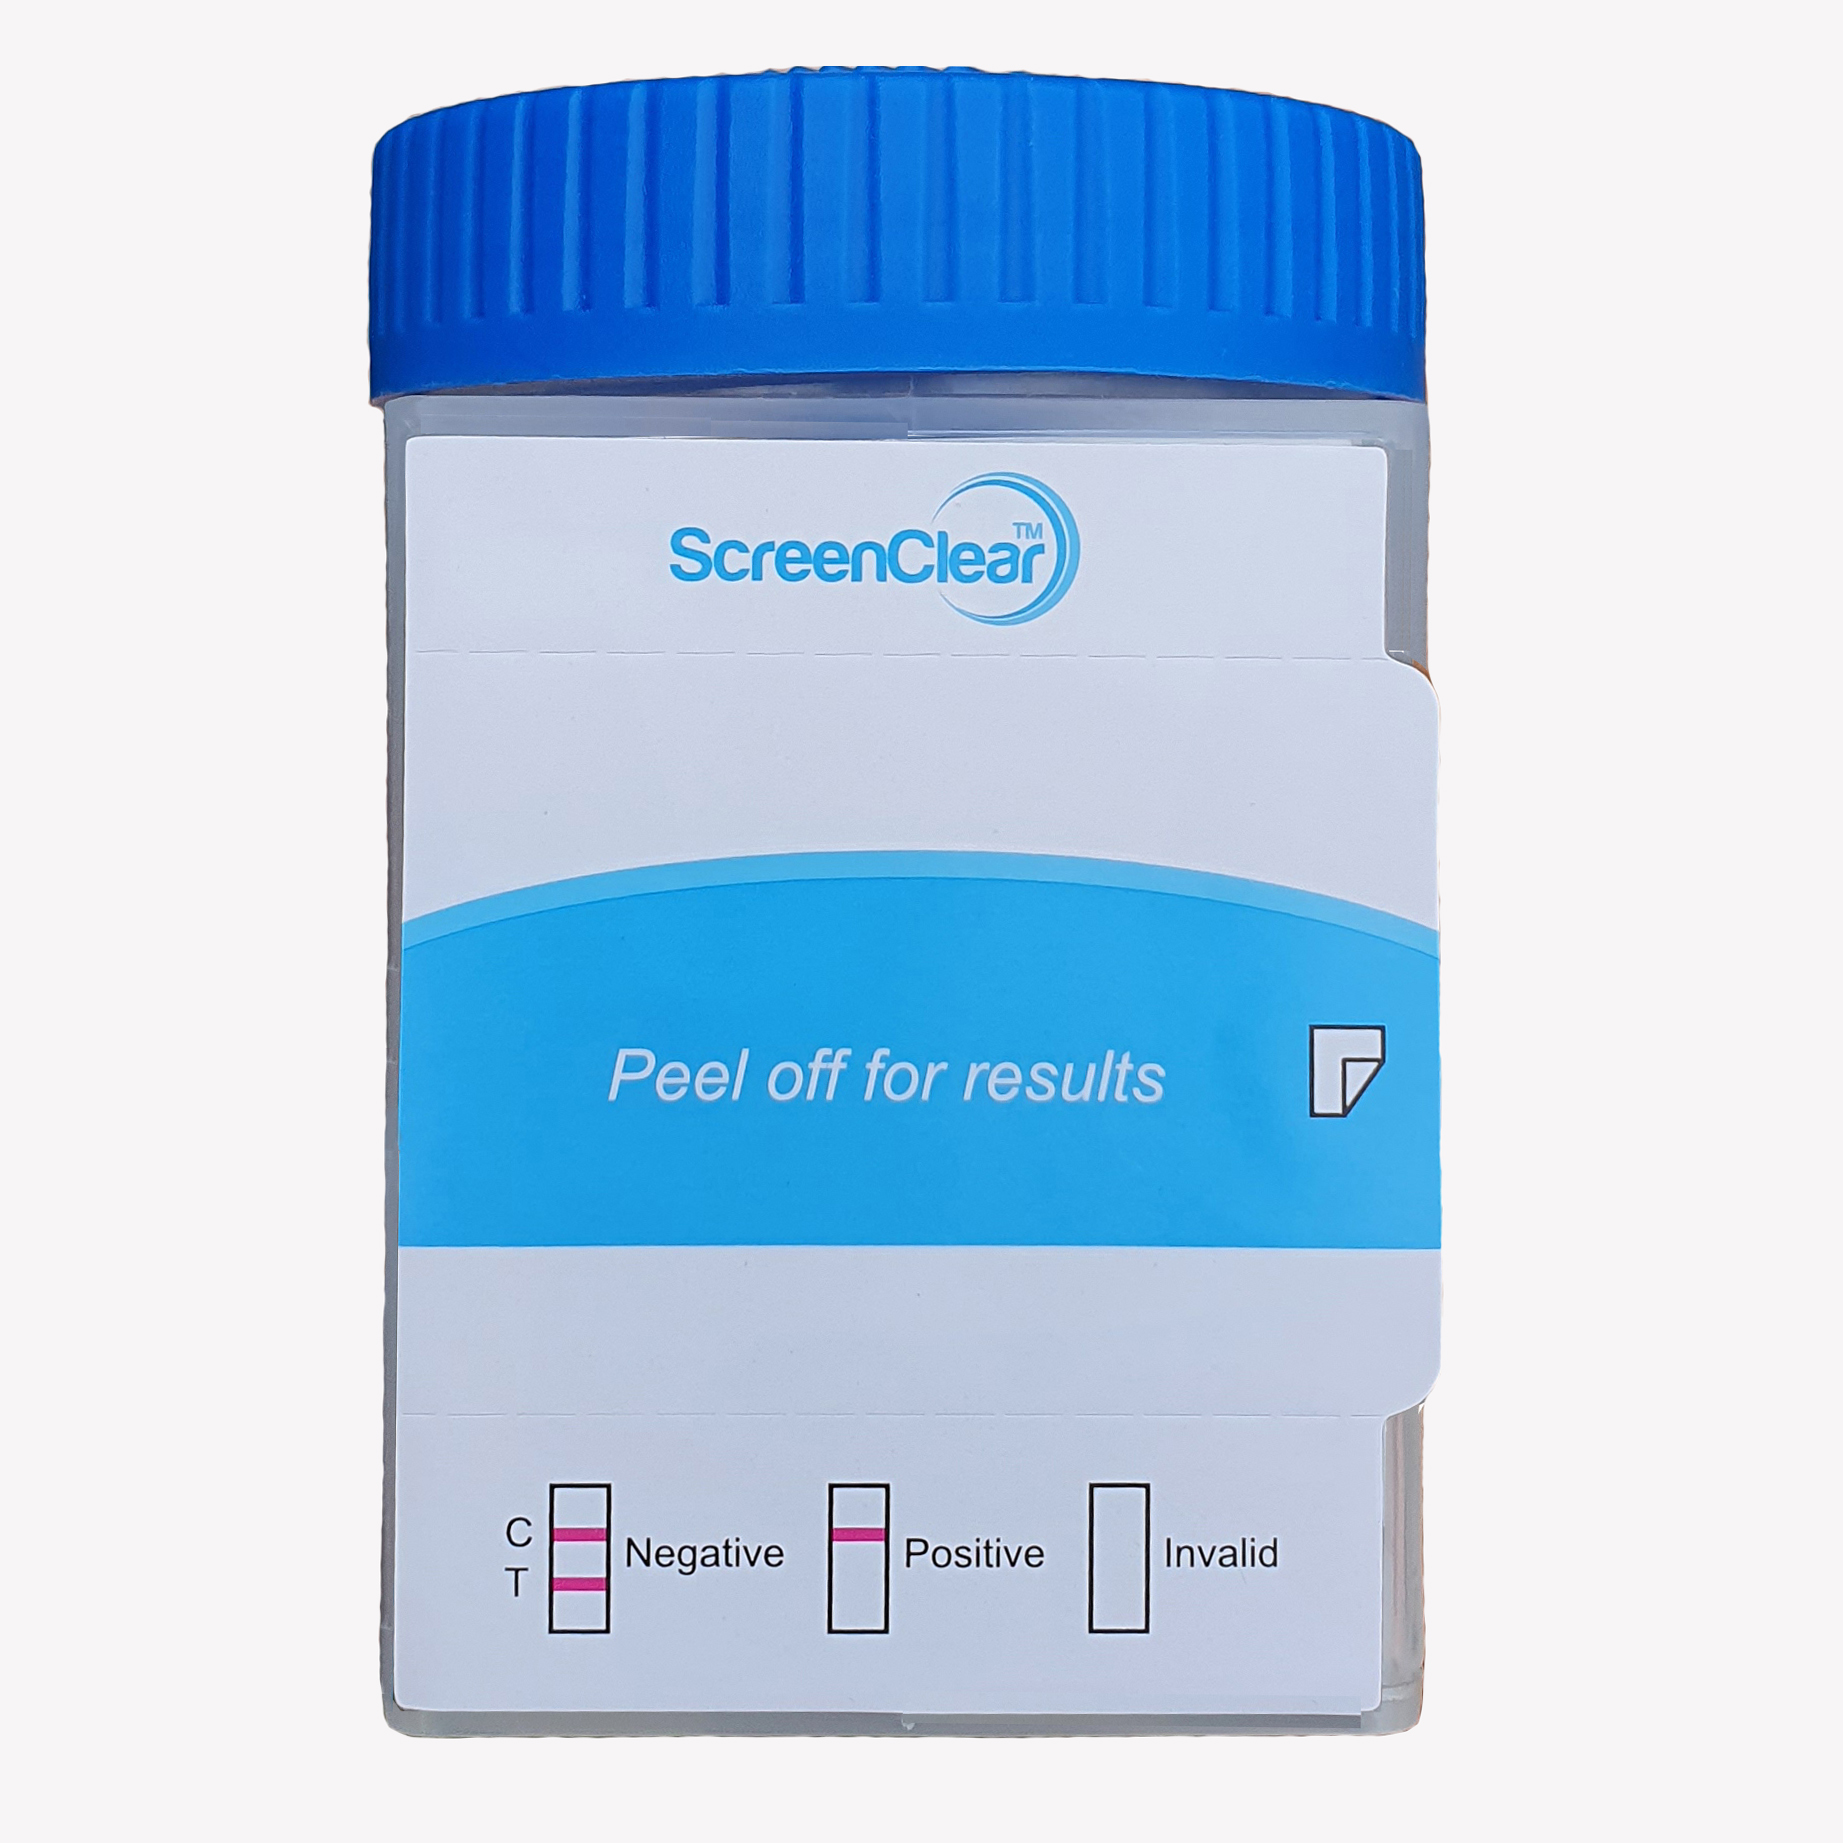 Screenclear urine drug test